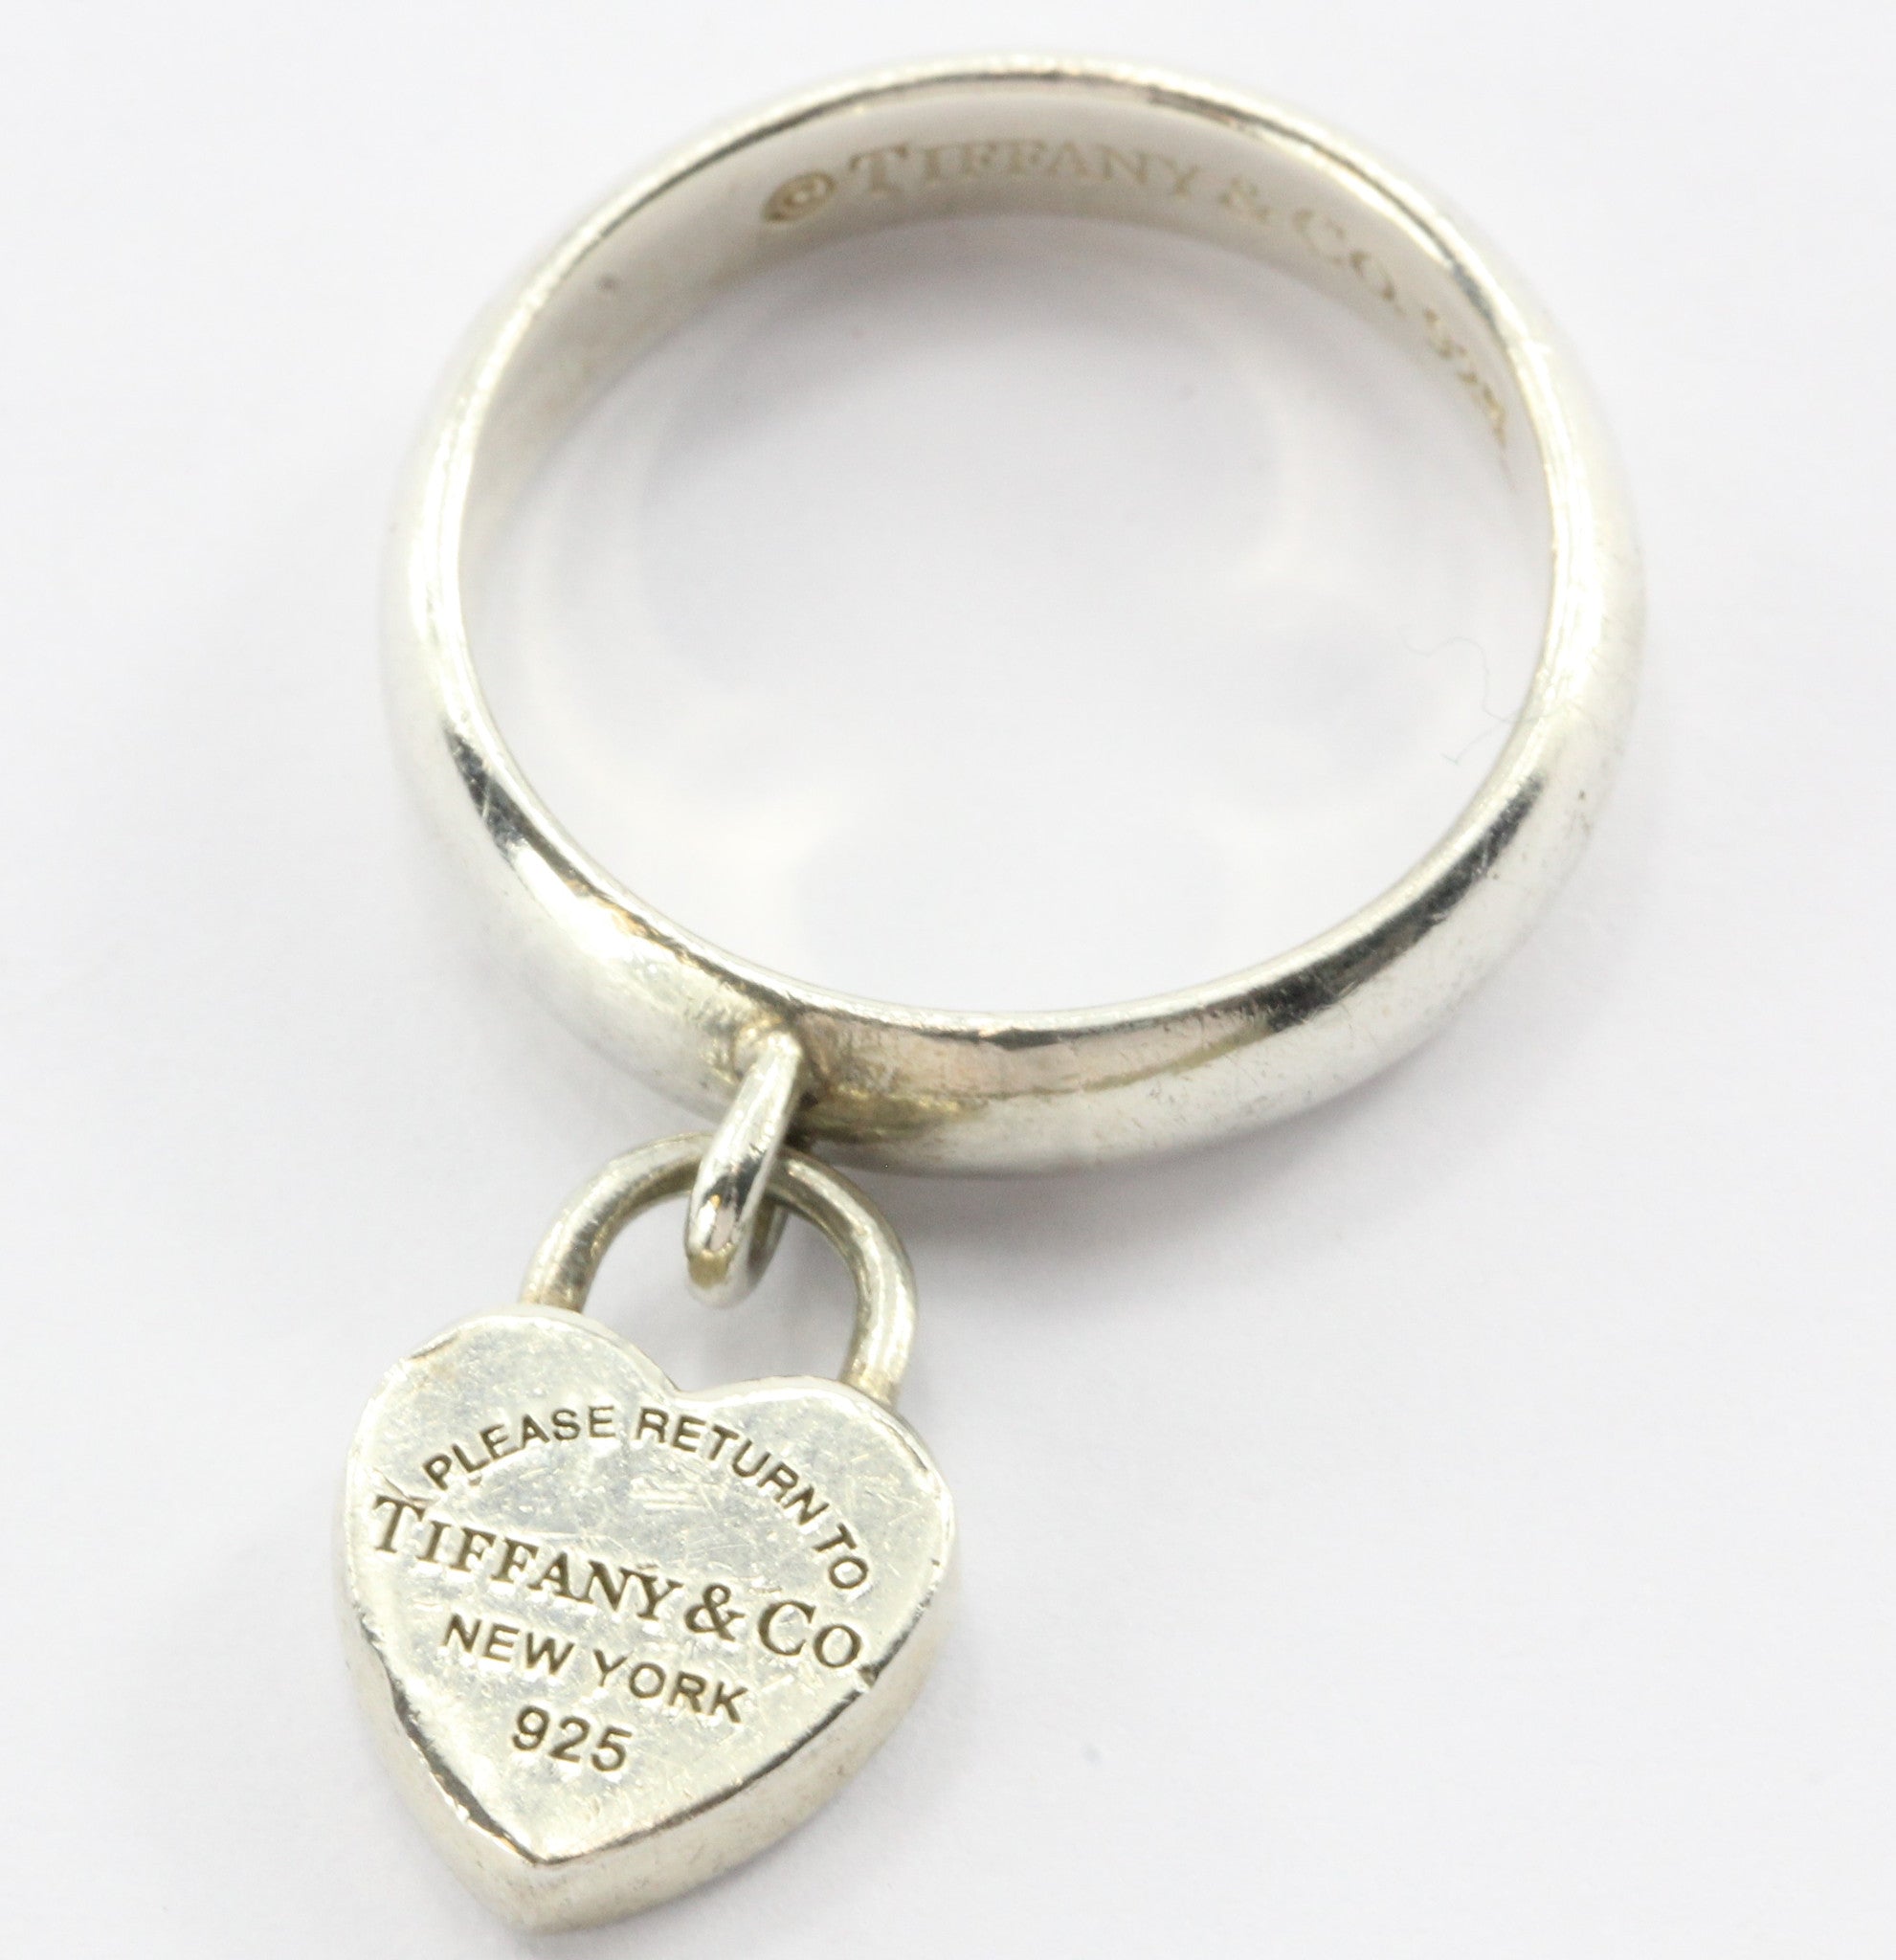 Return to Tiffany & Co Heart Padlock Lock Pendant Necklace in Silver